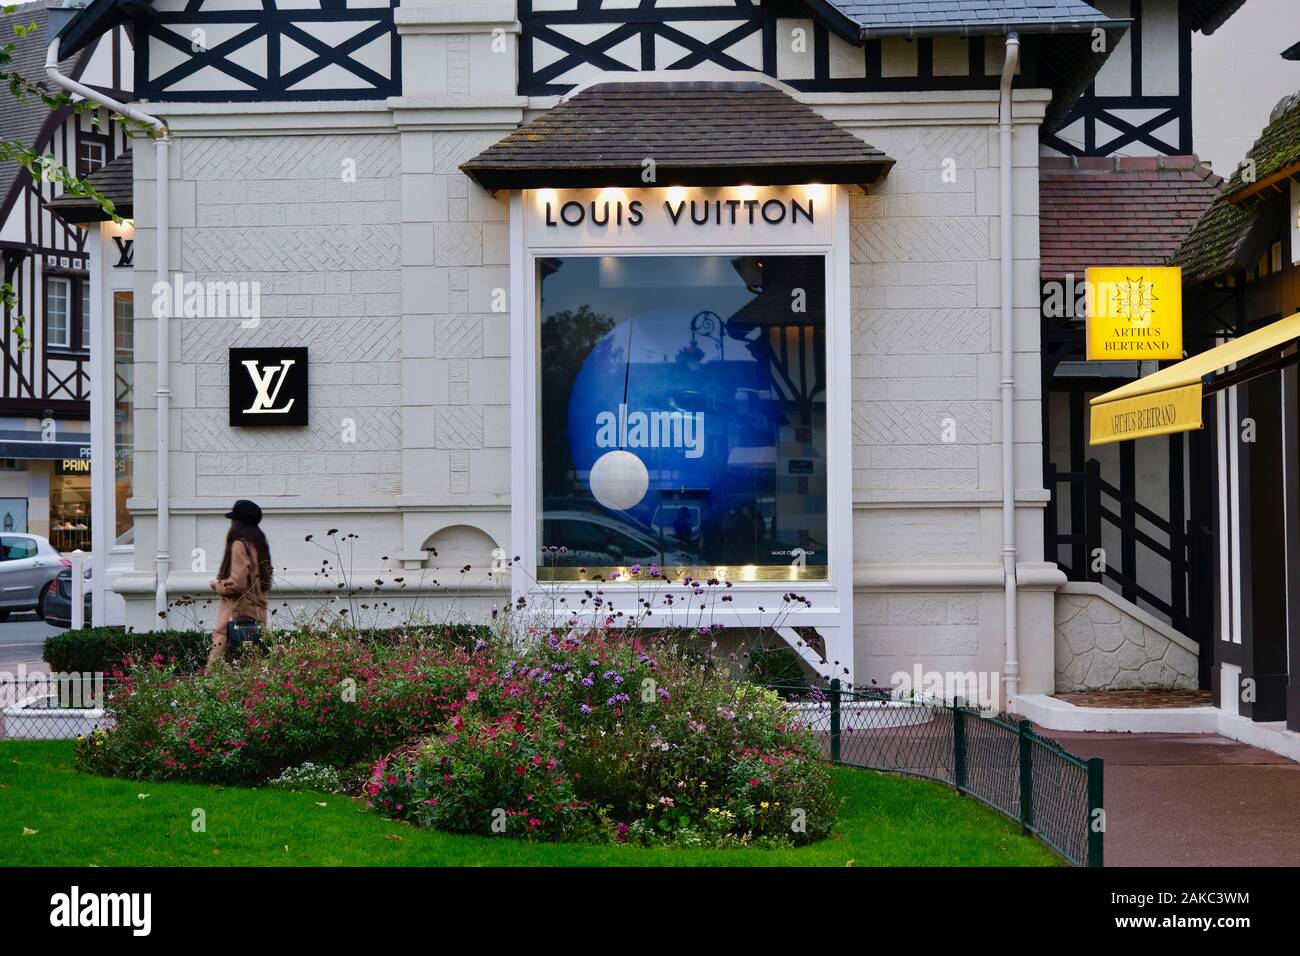 DEAUVILLE, FRANCE - September 06, 2017: Louis Vuitton store